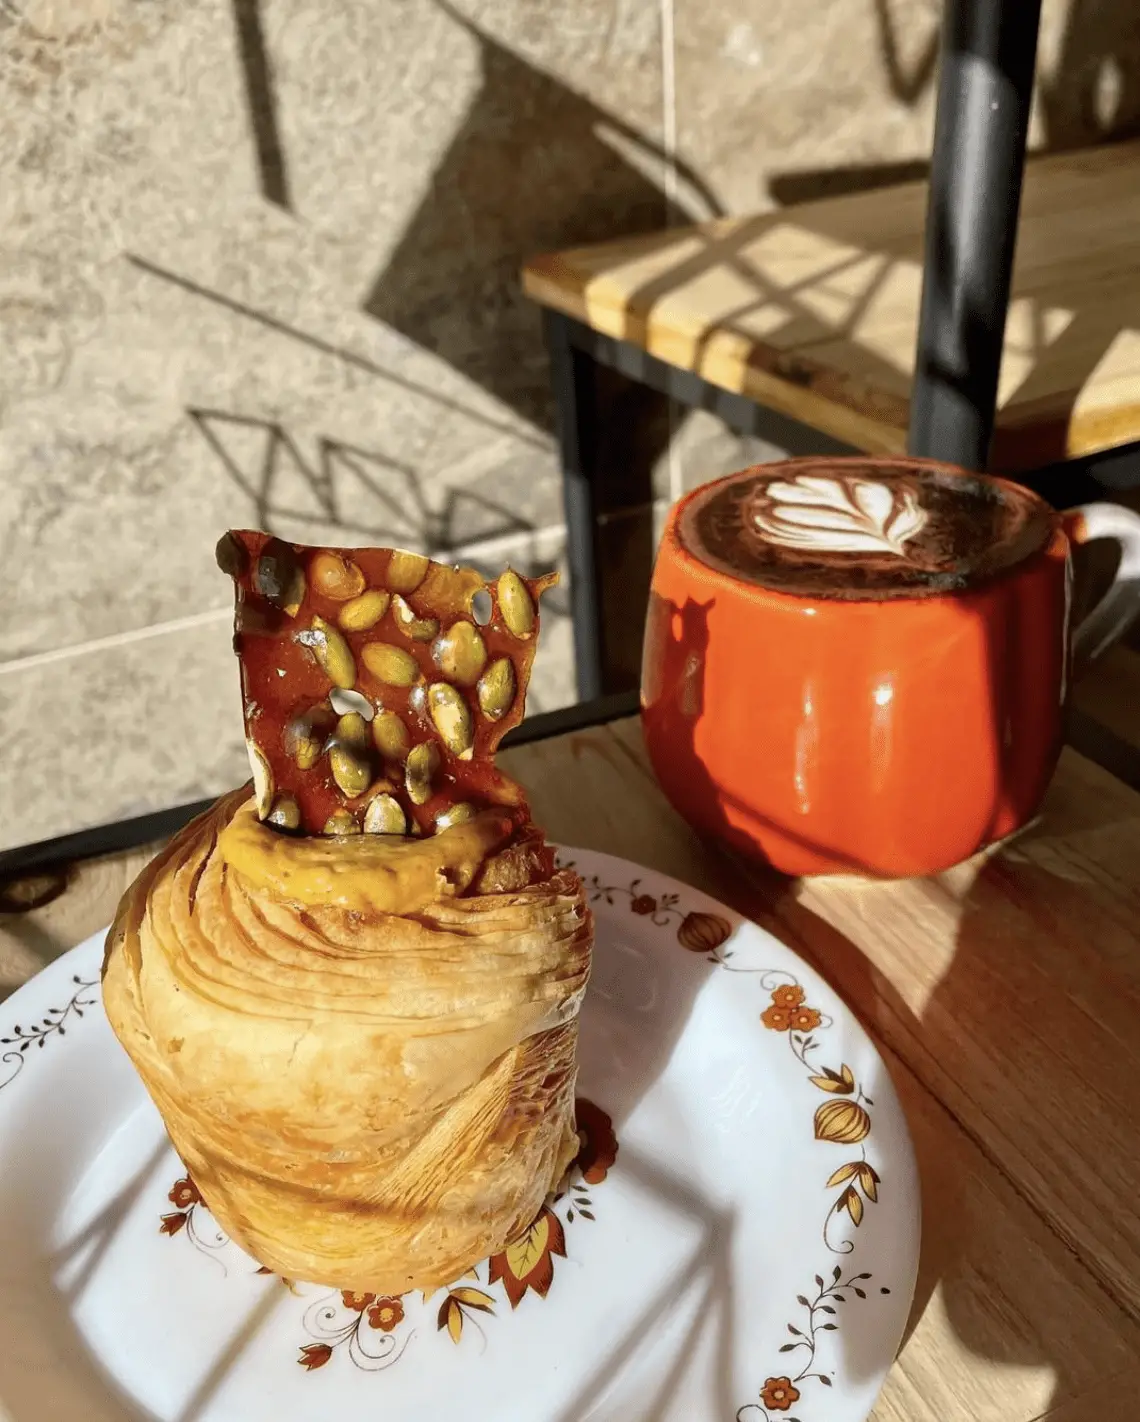 Twelve-Triangles-pastry-edinburgh-cafe 